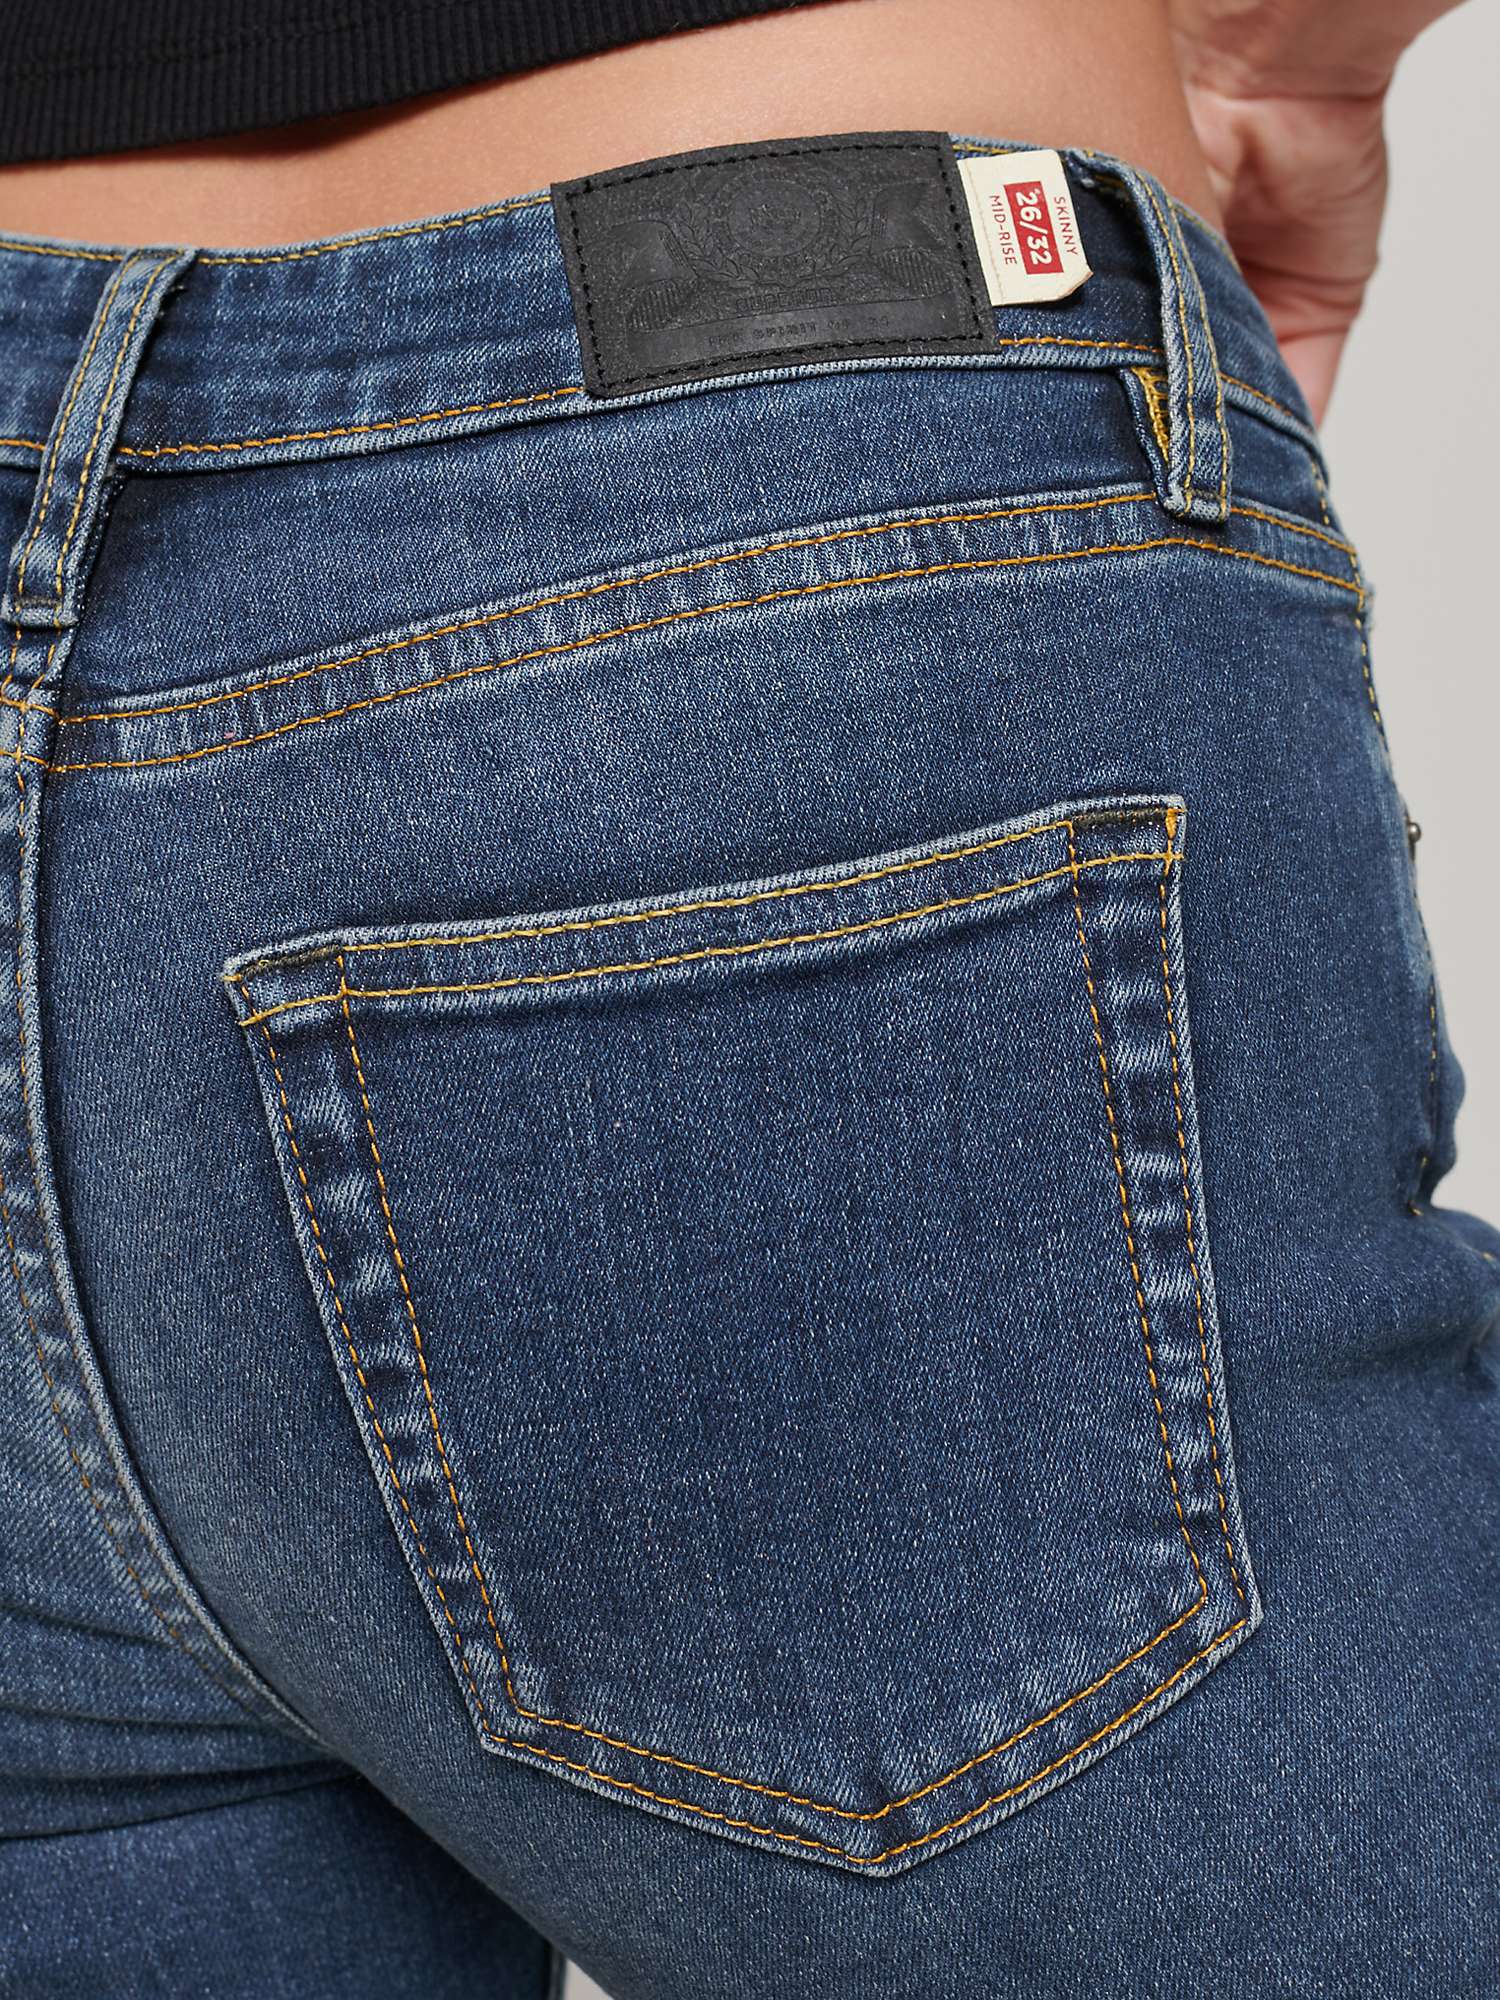 Buy Superdry Organic Cotton Vintage Mid Rise Skinny Jeans Online at johnlewis.com